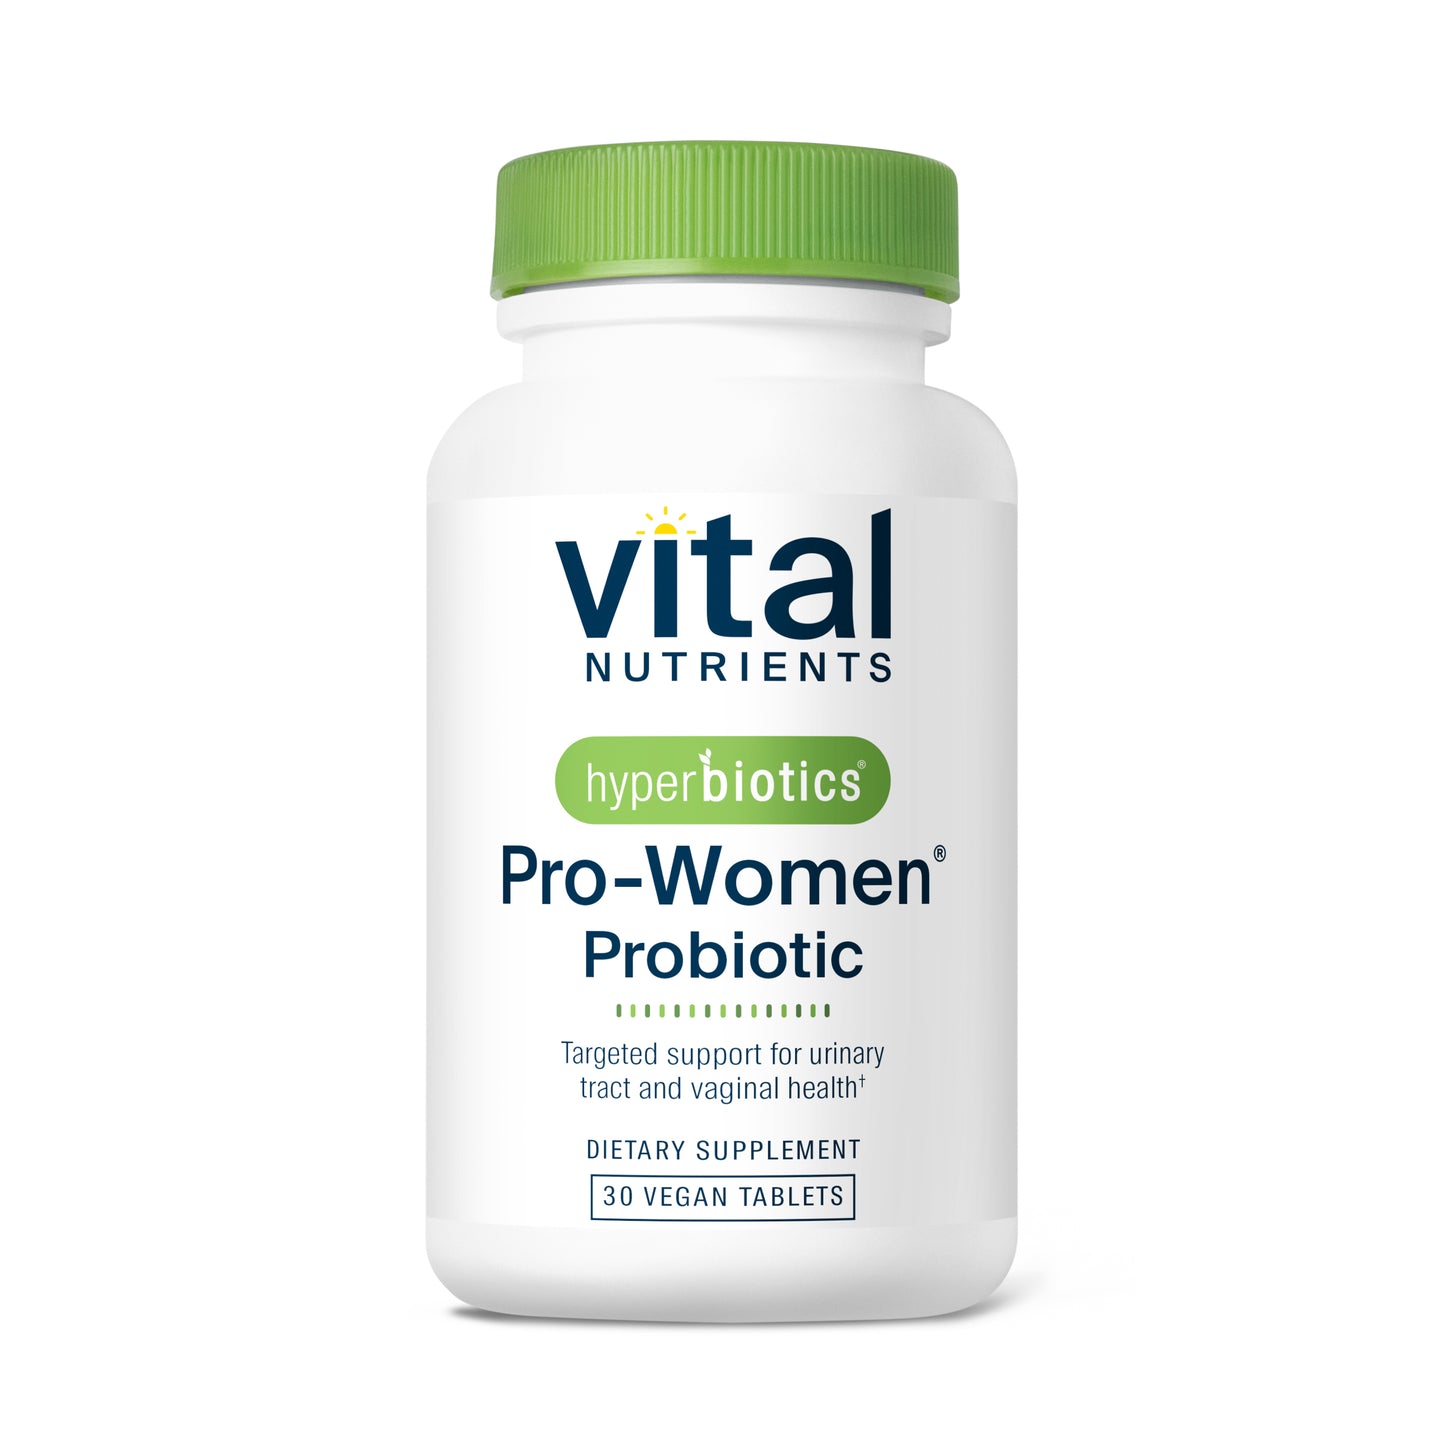 Hyperbiotics Pro-Women Probiotic 30 vegan tablets.